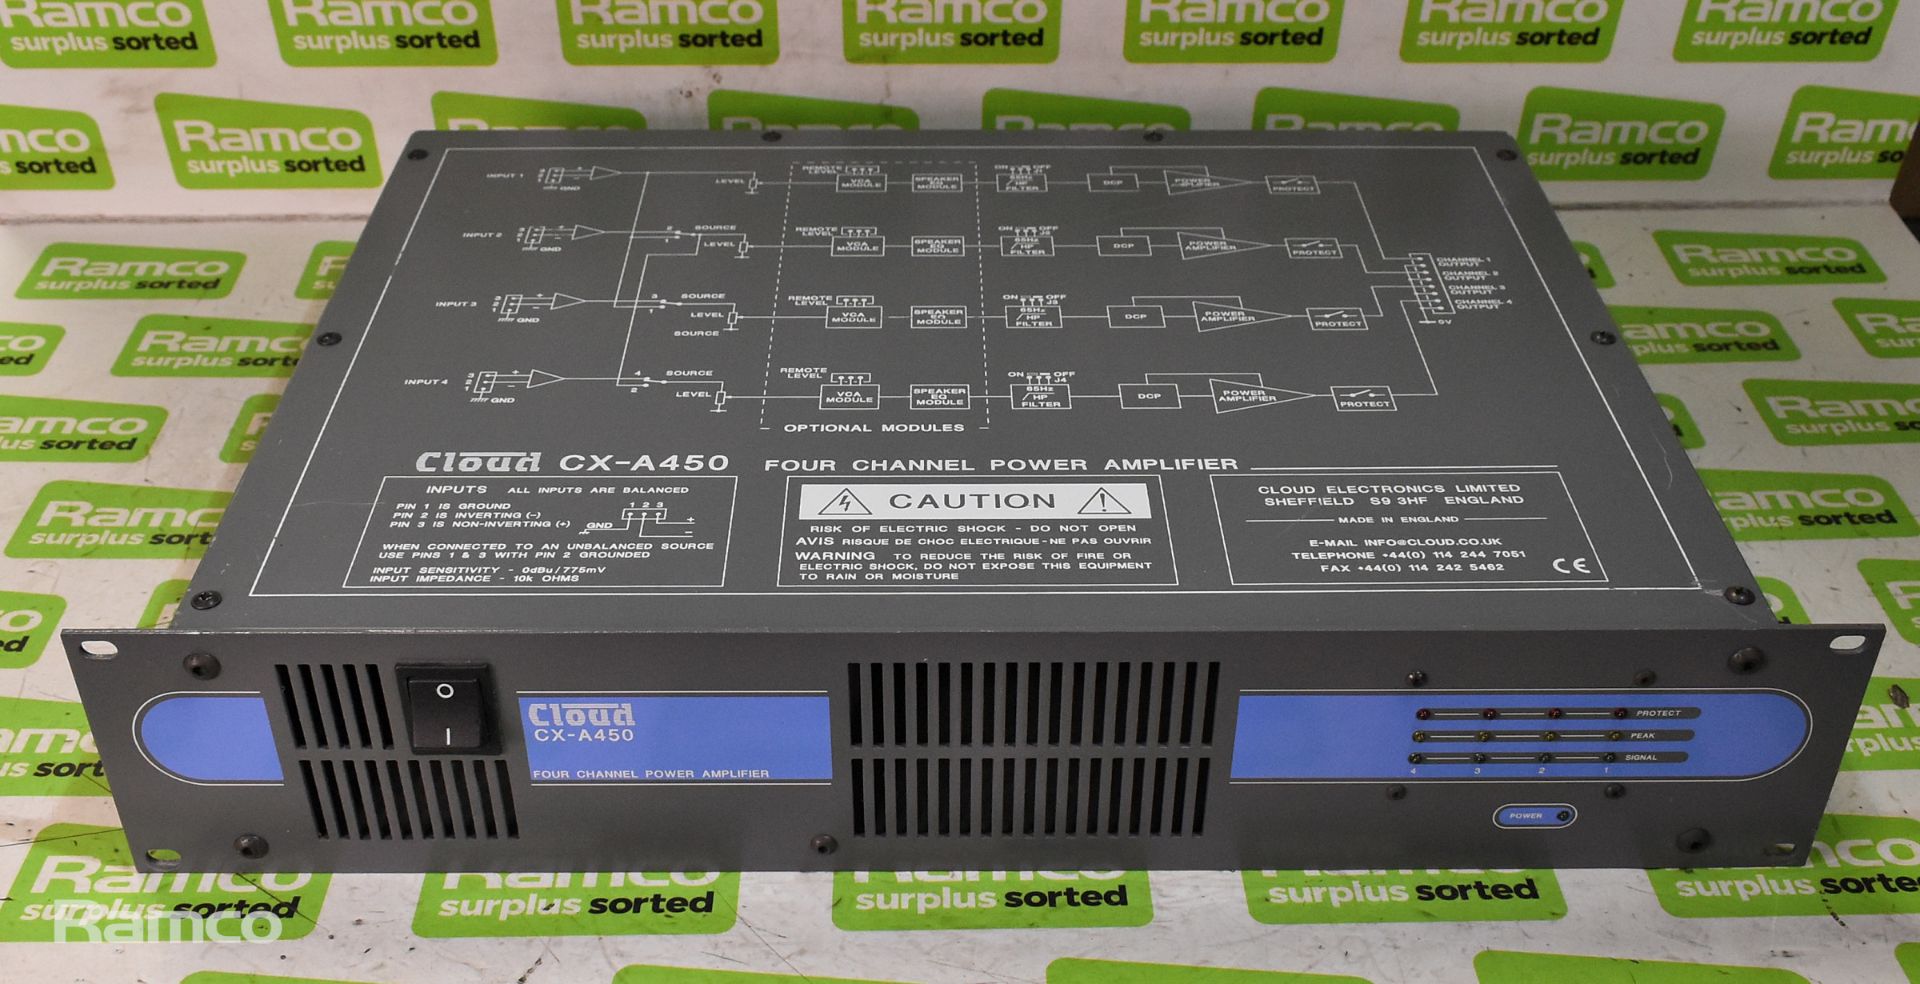 2x Cloud CX-A450 4-channel power amplifiers - Image 7 of 11